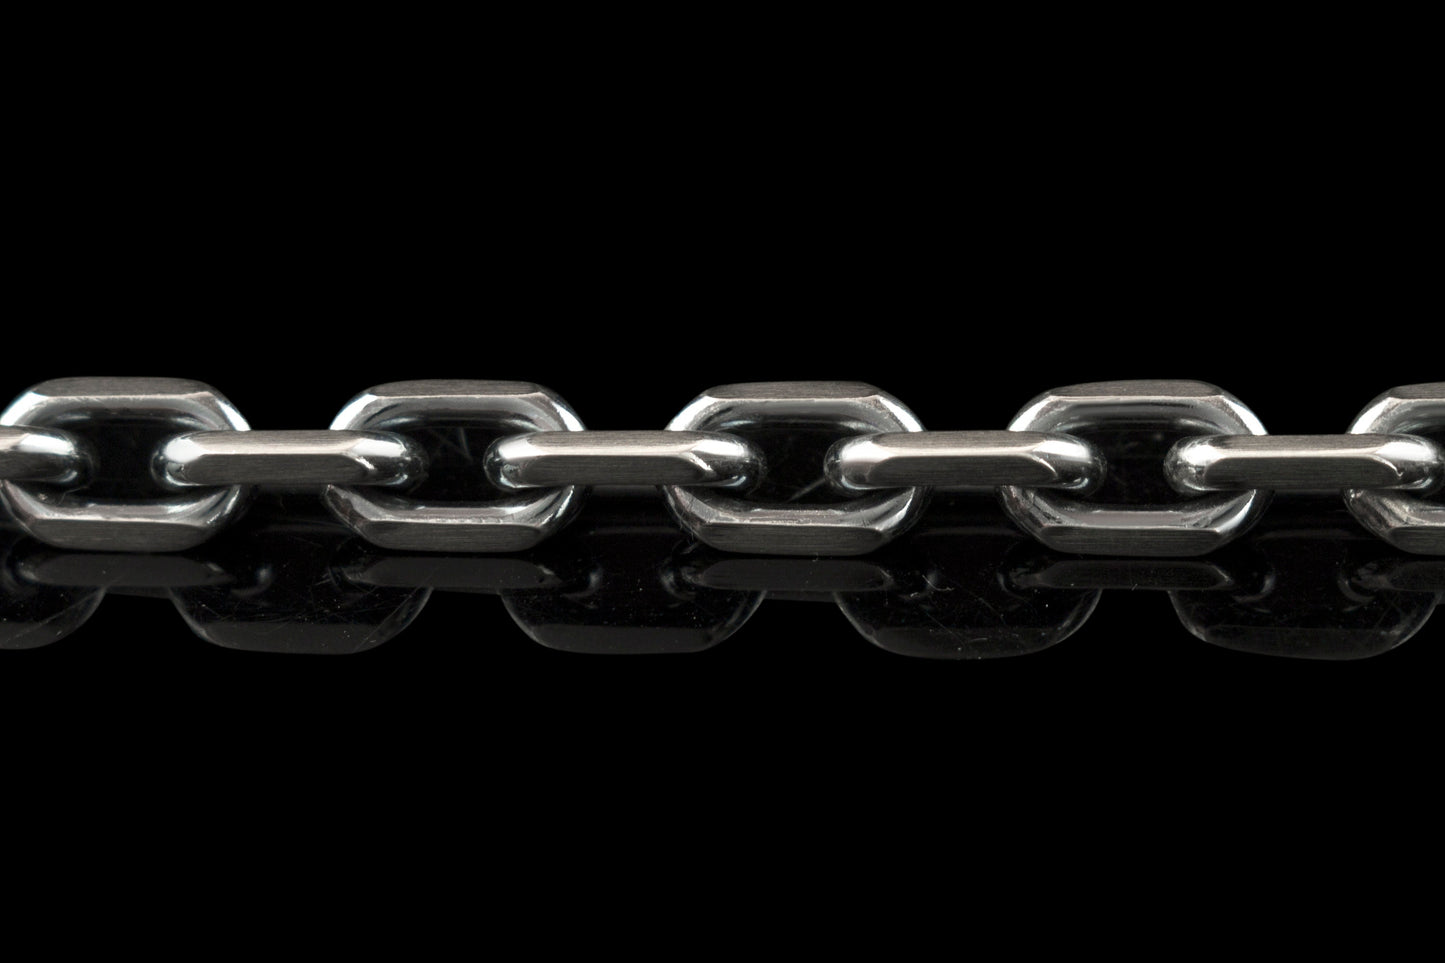 Anchor Chain Men's silver chain 23 inch Heavy chain Oxidized chain silver chain Handmade silver jewelry